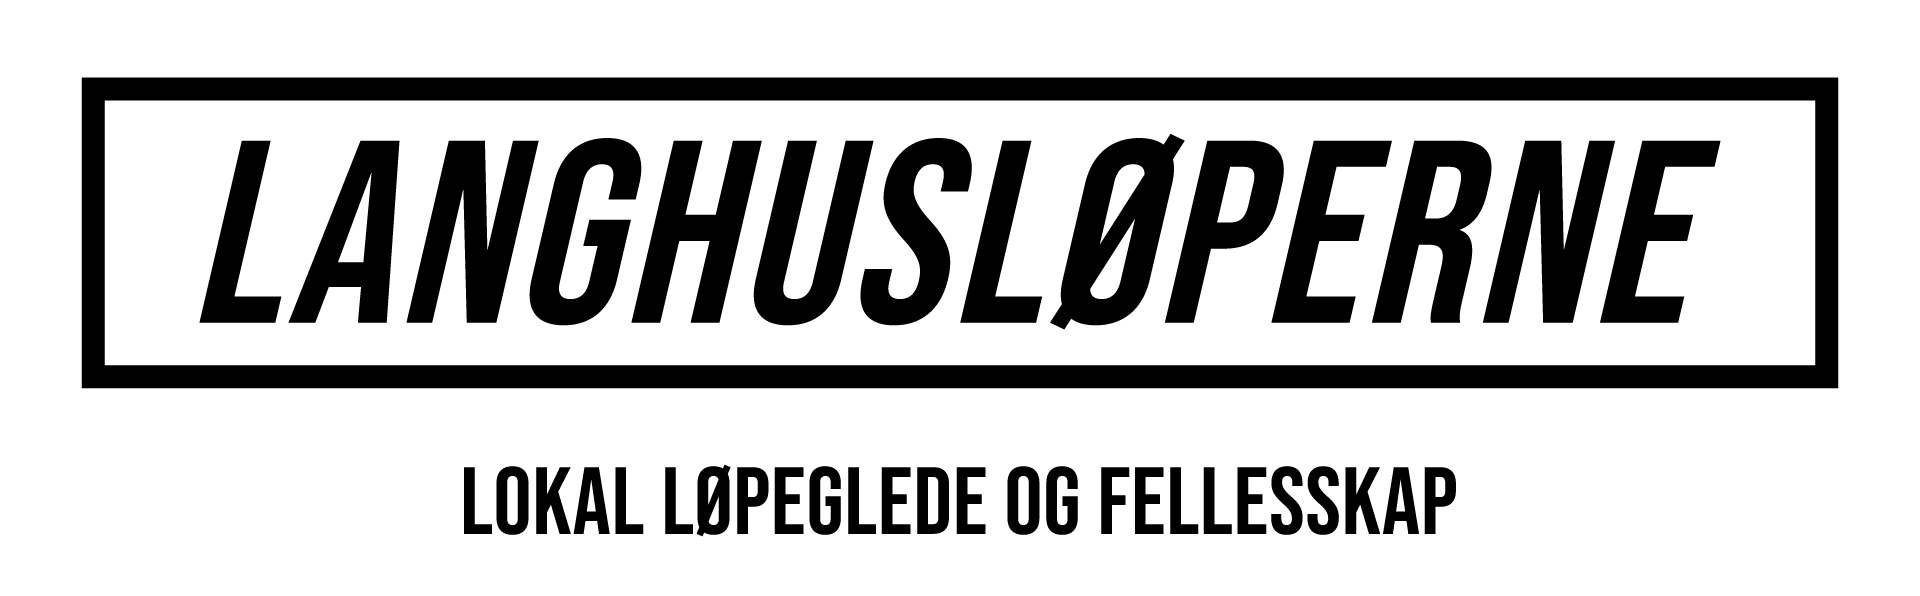 Langhusløperne logo